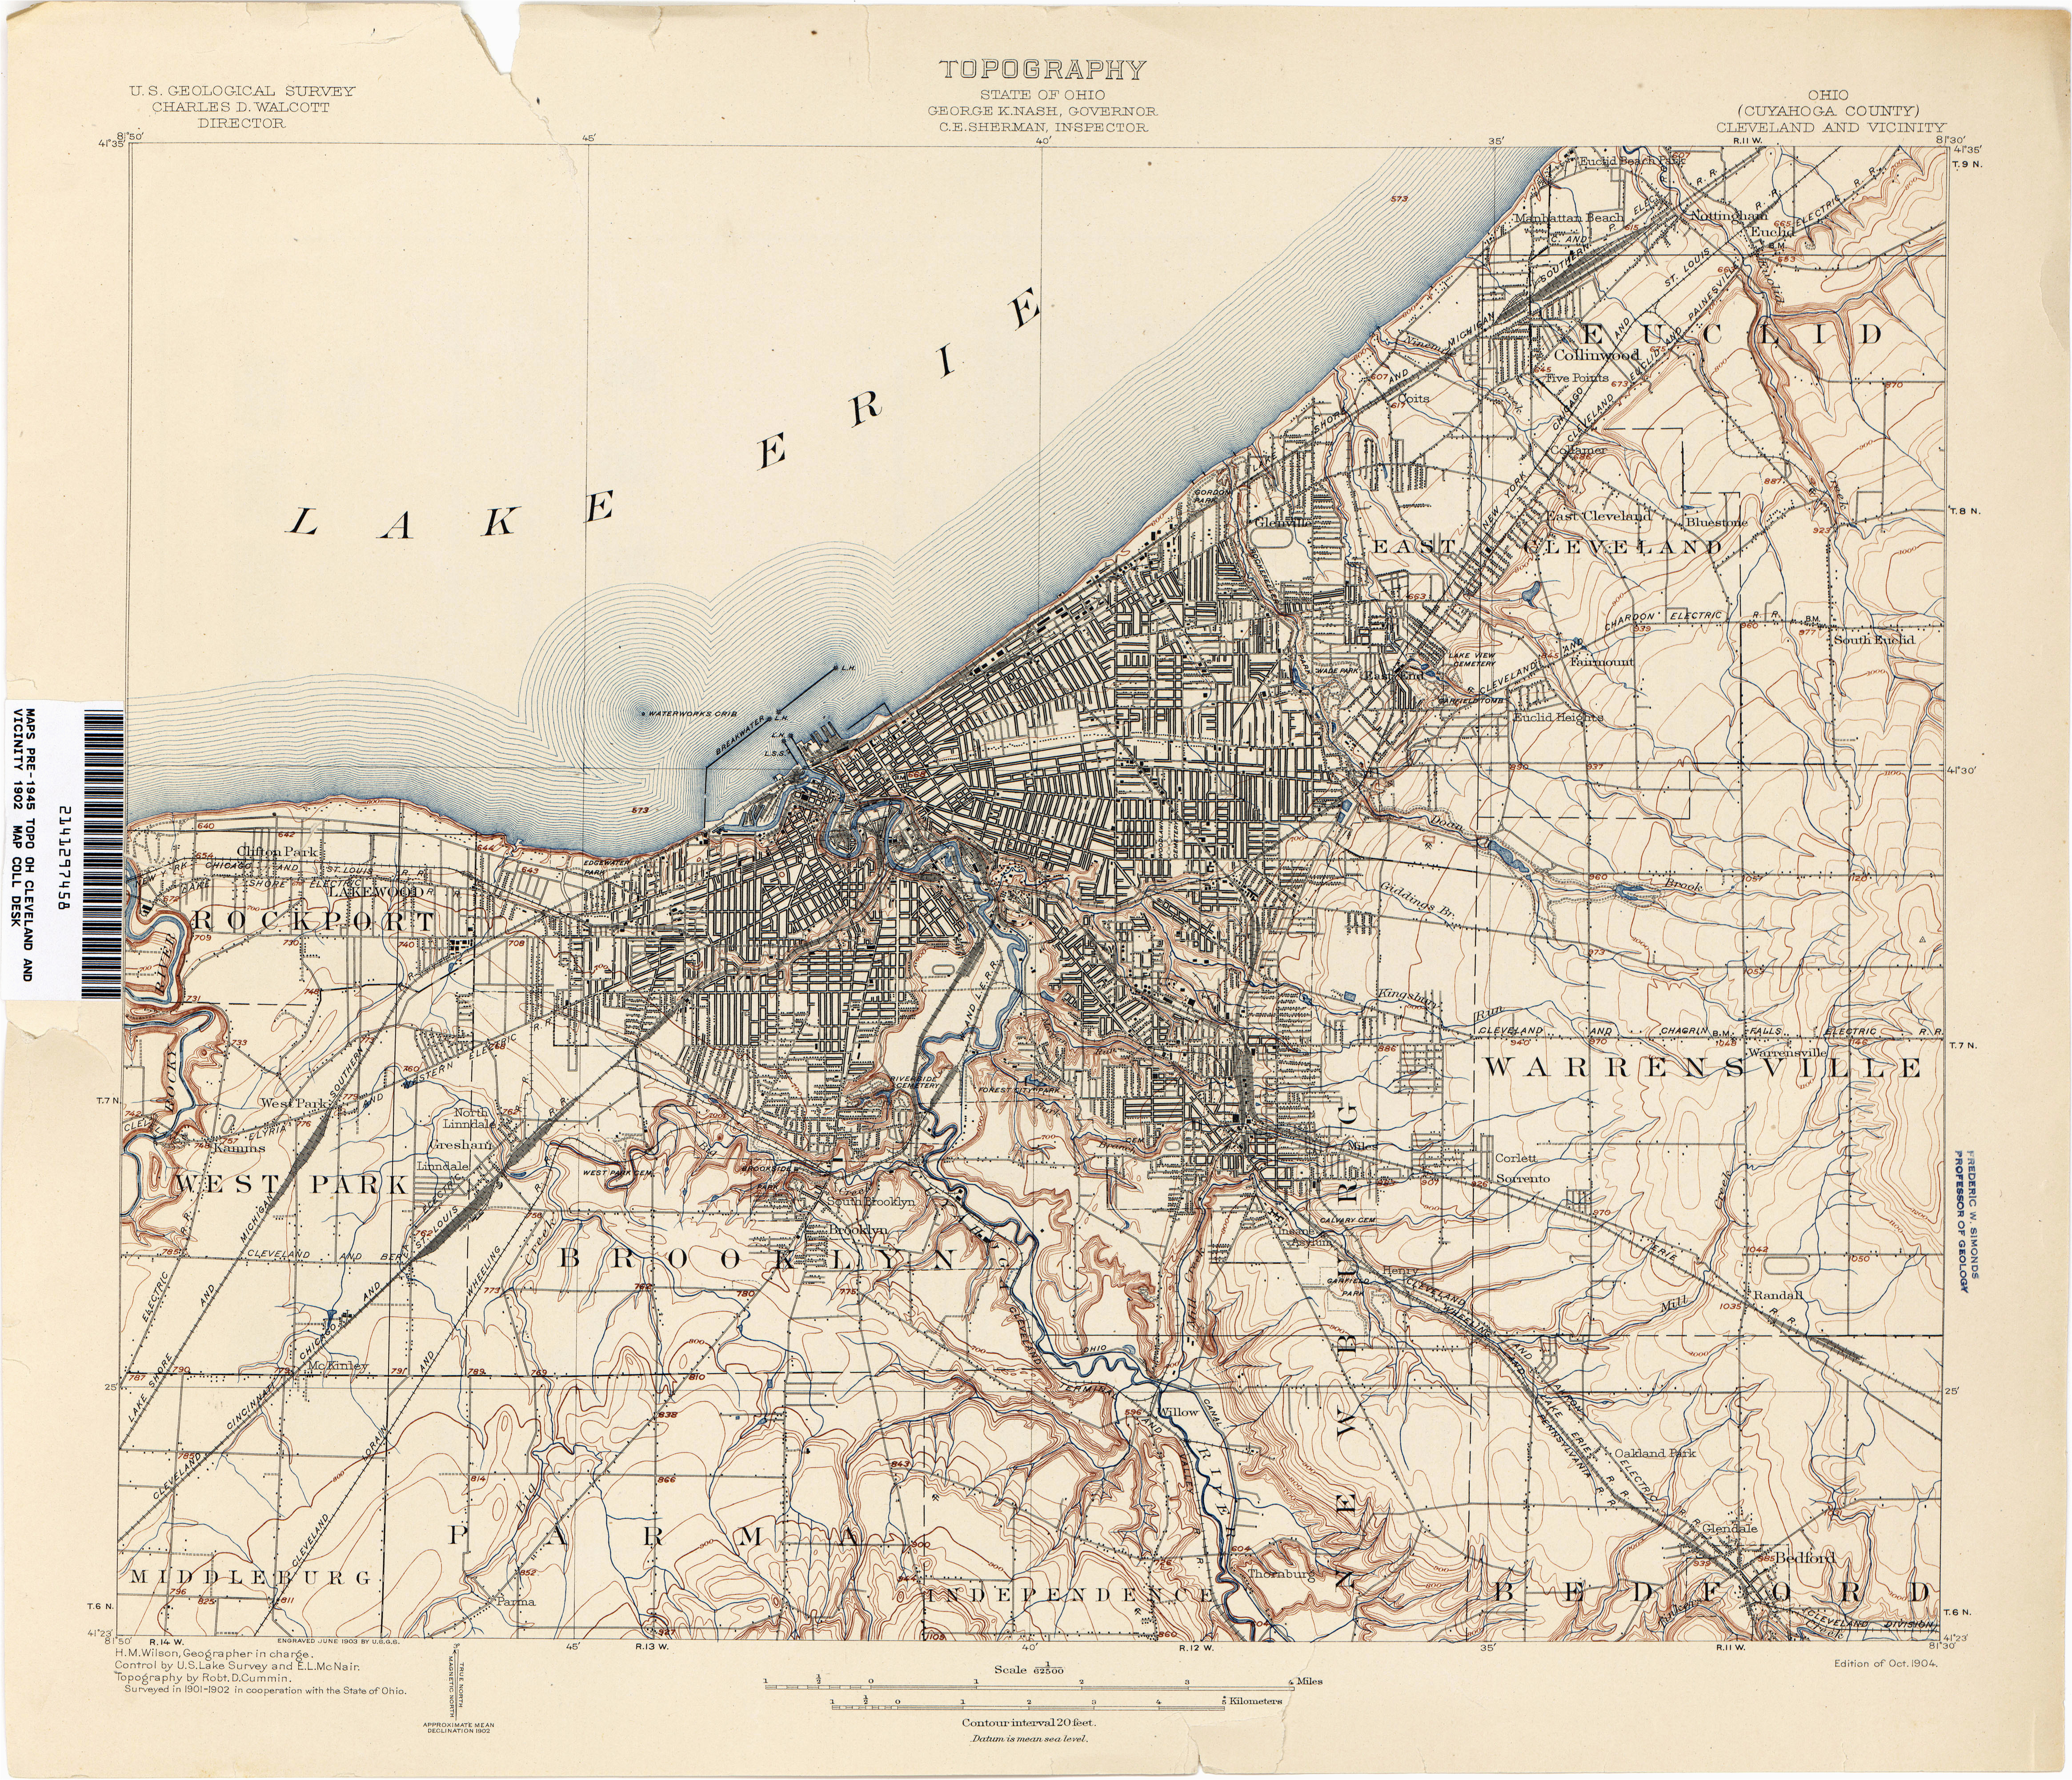 marietta ohio zip code unique ohio historical topographic maps perry